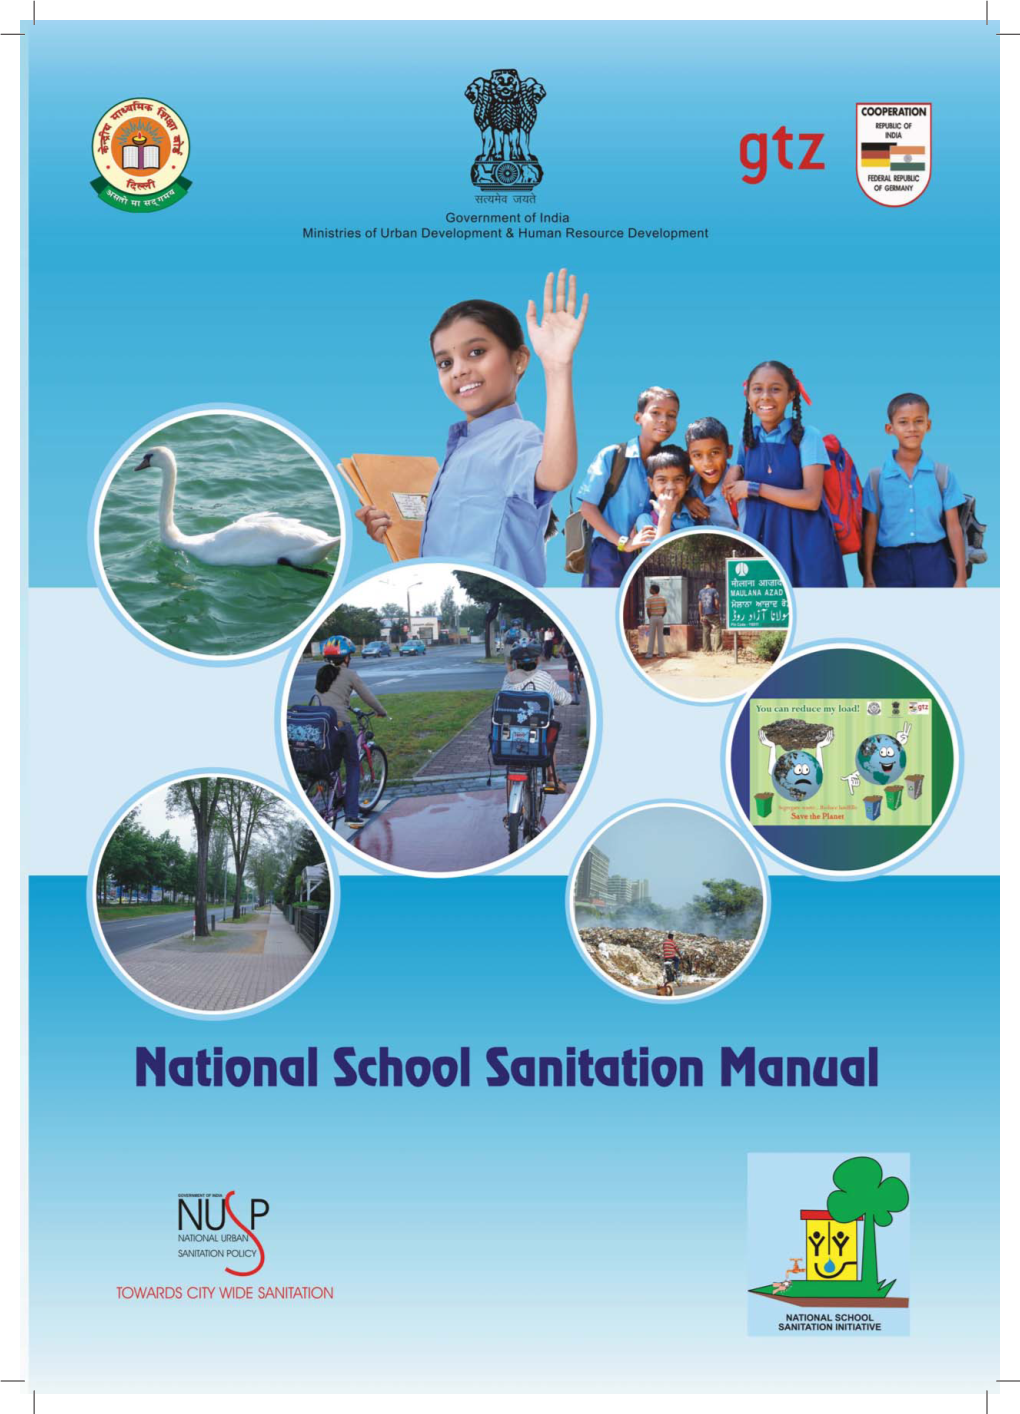 National School Sanitation Manual Advisory Group on School Sanitation Manual Draft Ing National School Sanitation Initiative Committ Ee